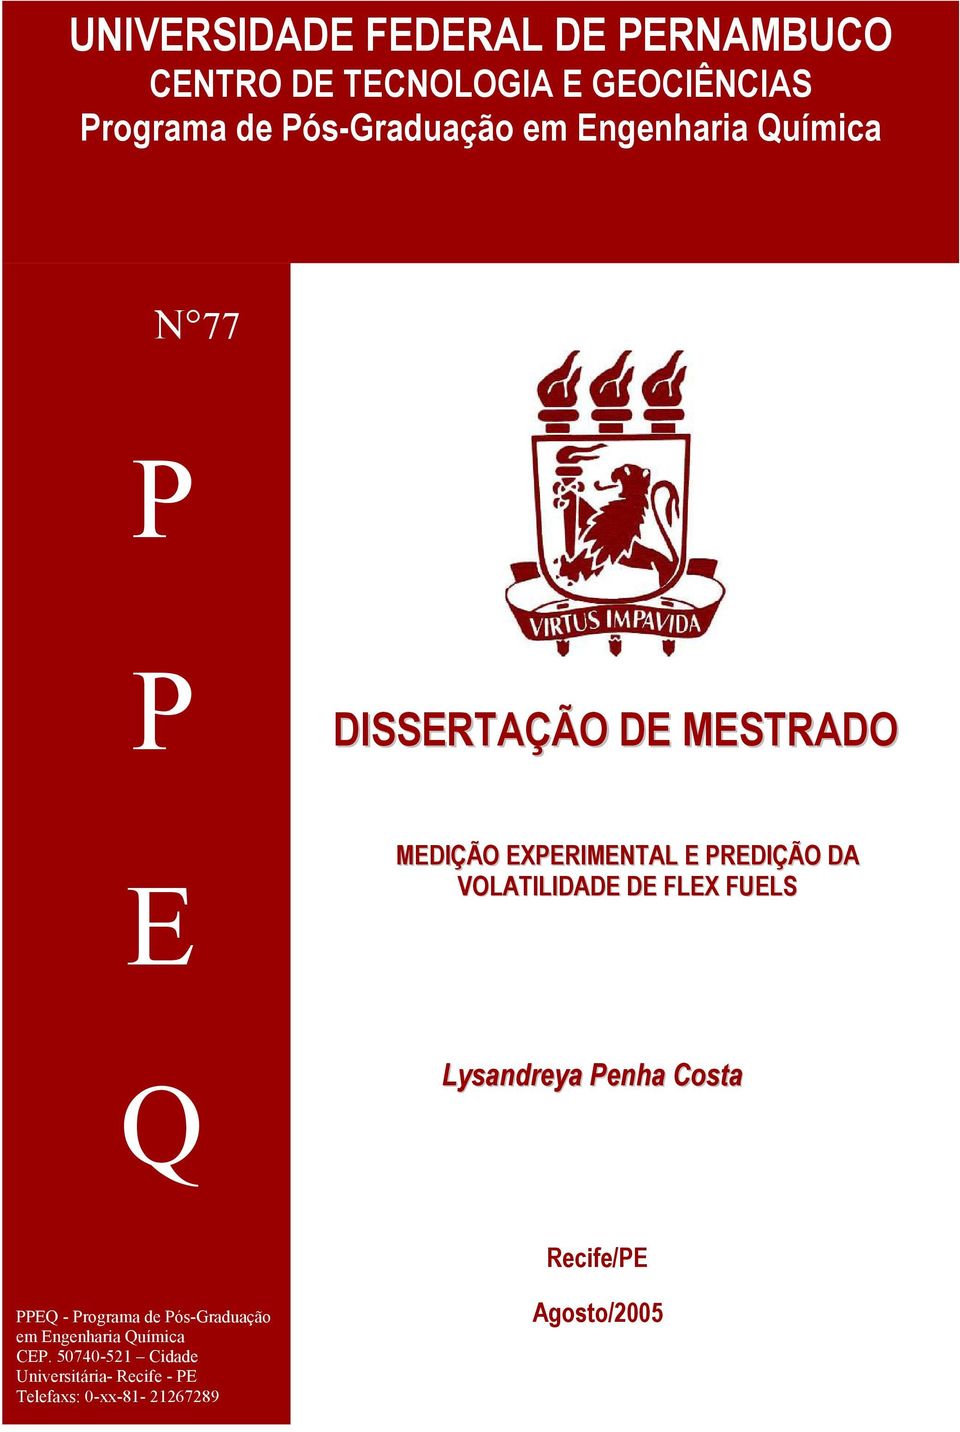 VOLATILIDADE DE FLEX FUELS Q Lysandreya Penha Costa Recife/PE PPEQ - Programa de Pós-Graduação em